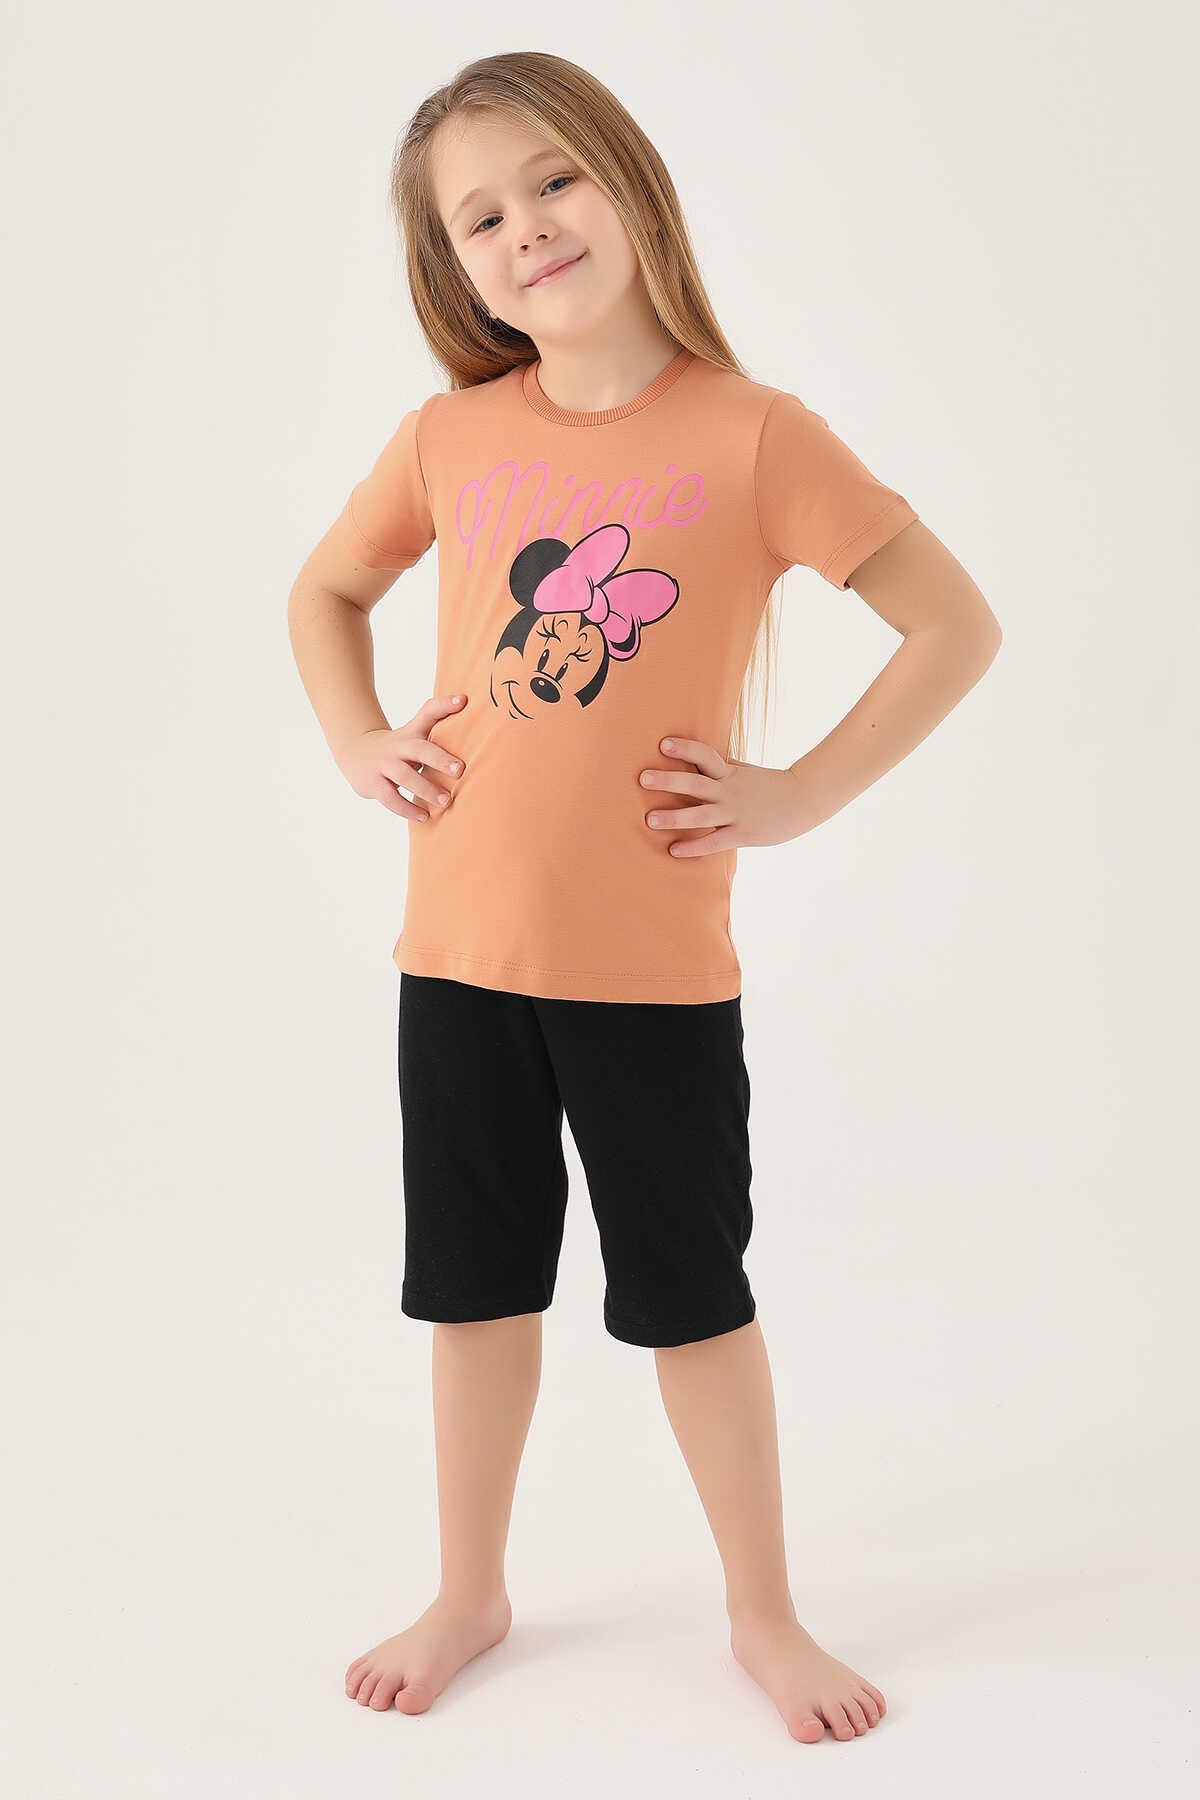 Minnie Mouse - Minnie Mouse D4805-2 Kız Çocuk T-Shirt Sumak